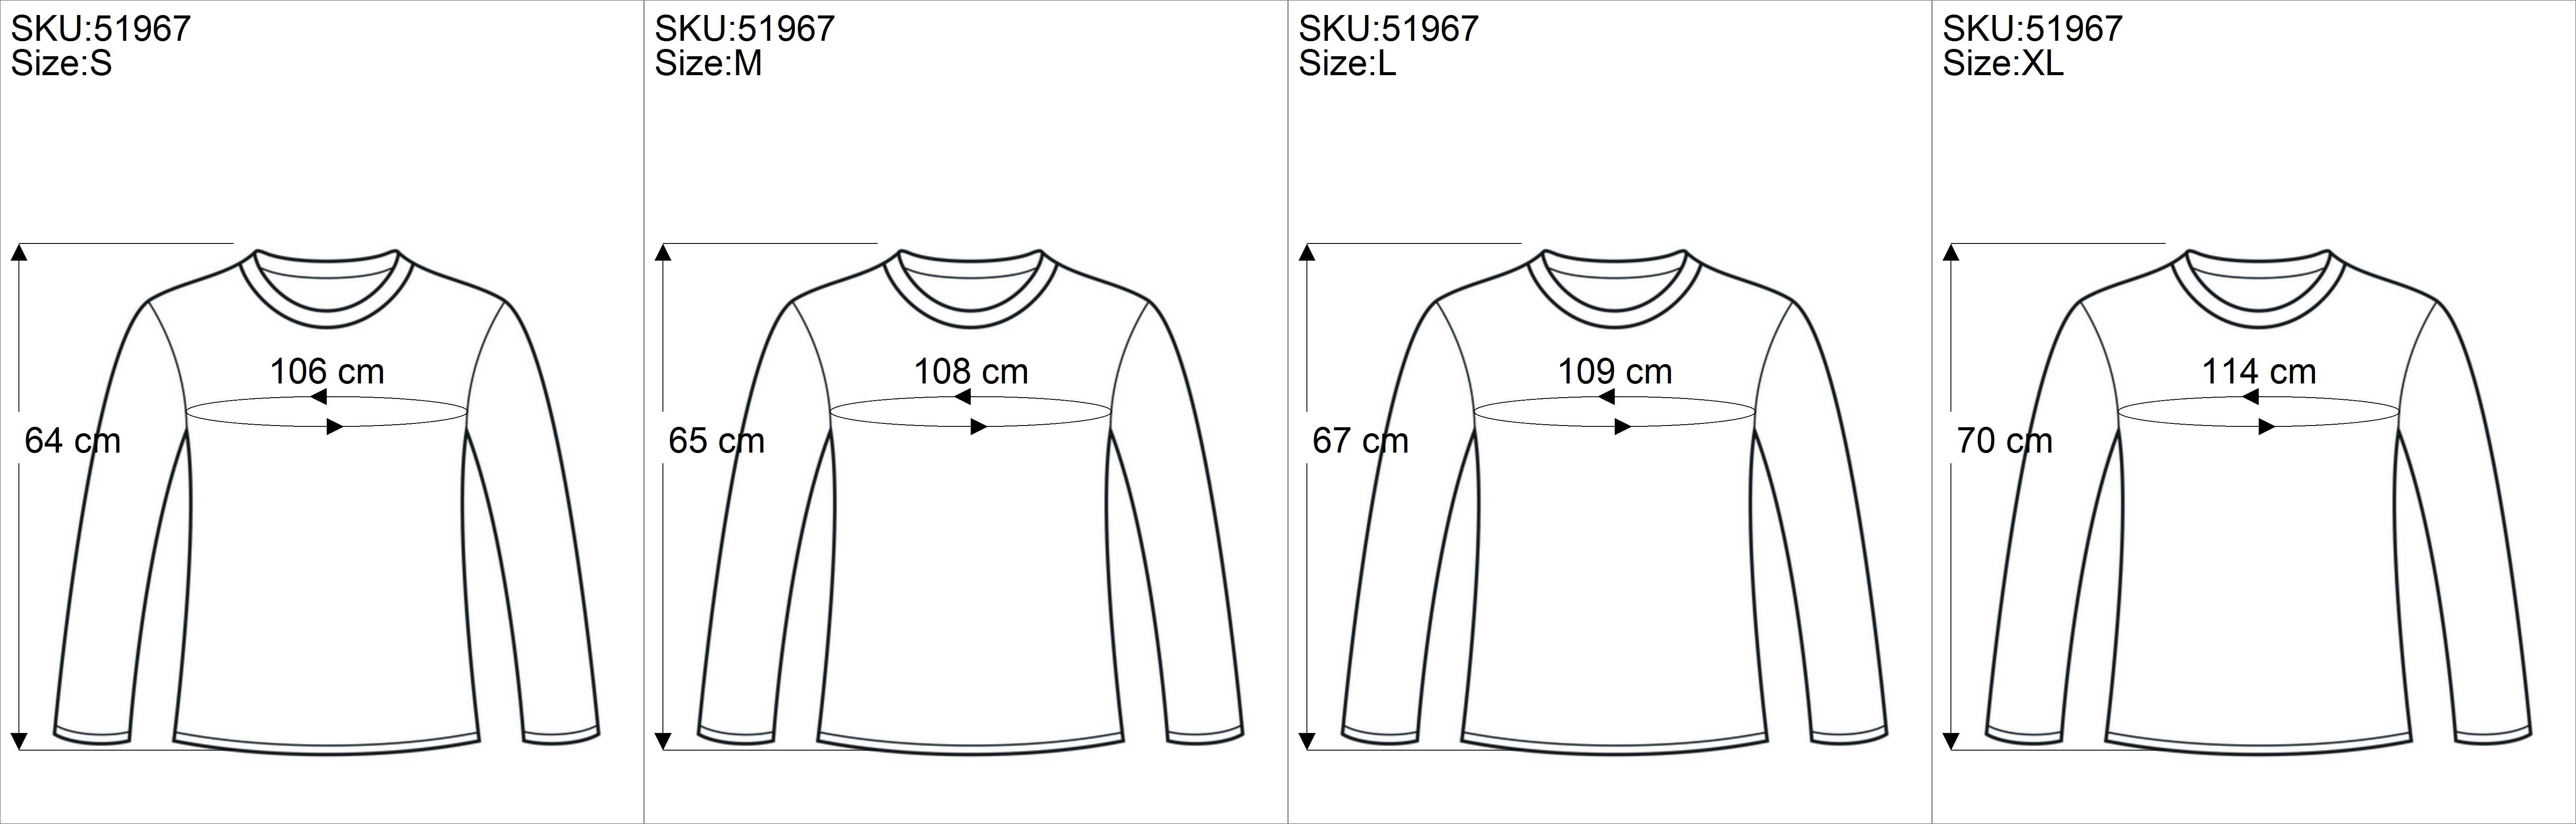 Guru-Shop Longsleeve Bekleidung aus Longshirt Bio-Baumwolle, rot alternative Lockeres Boho